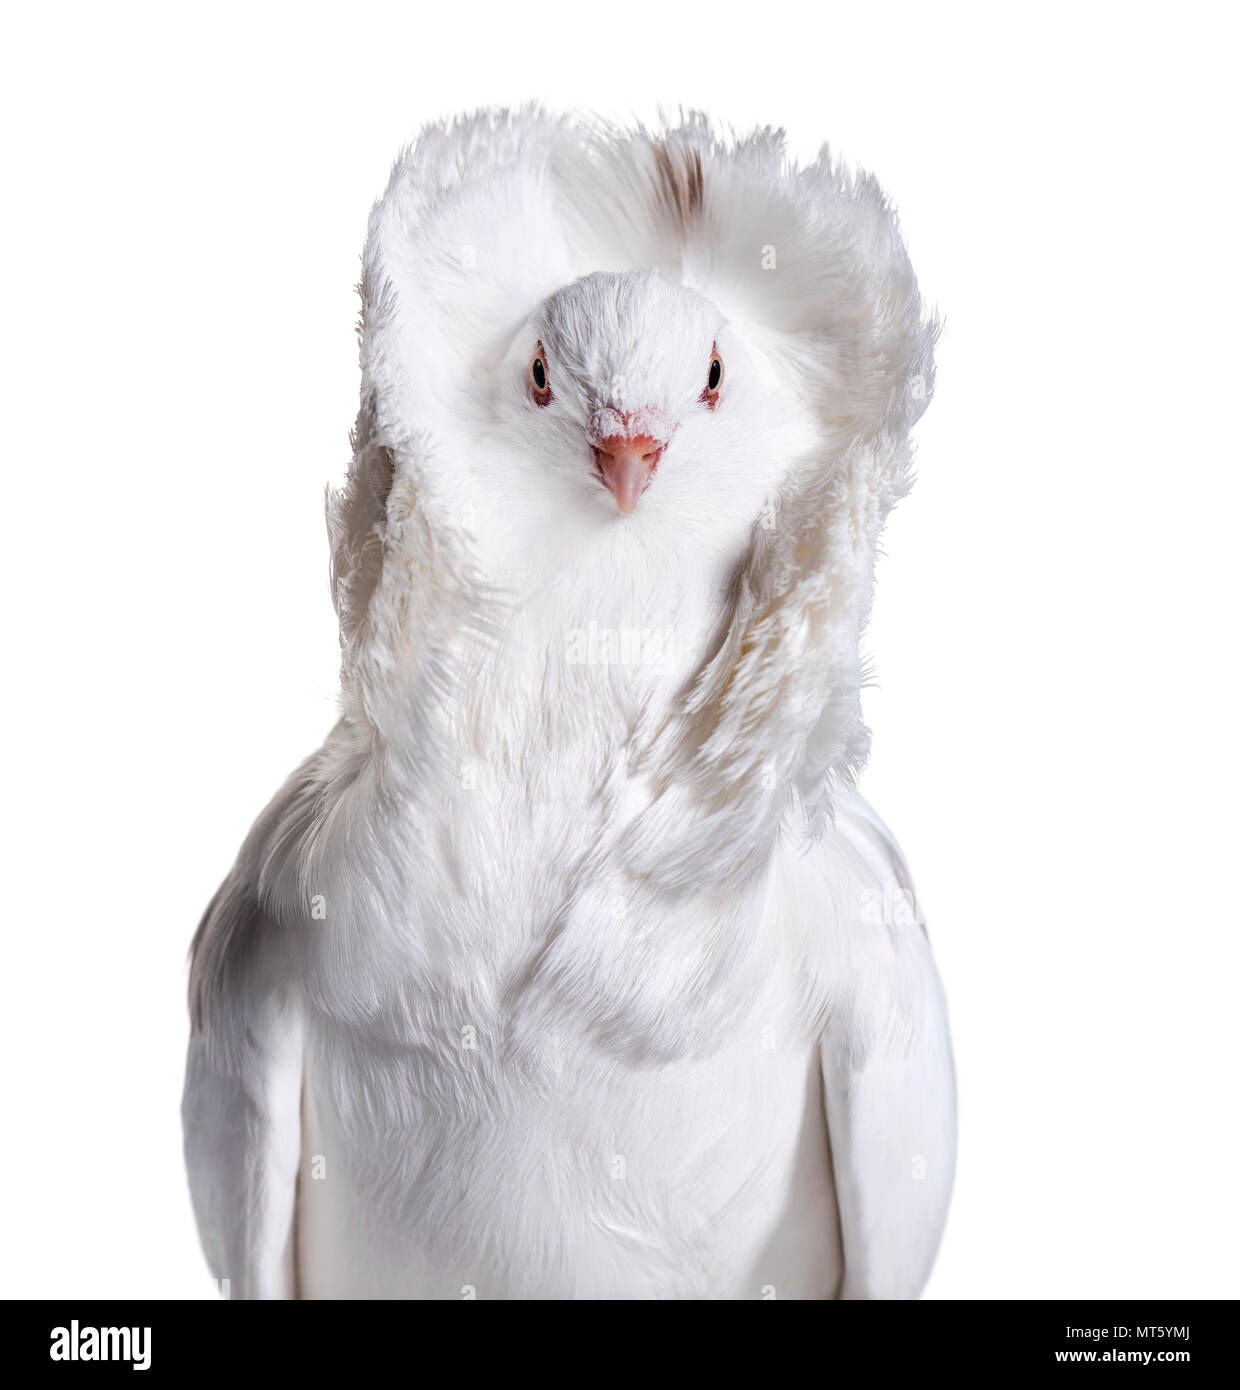 White Jacobin pigeon portrait against white background Stock Photo